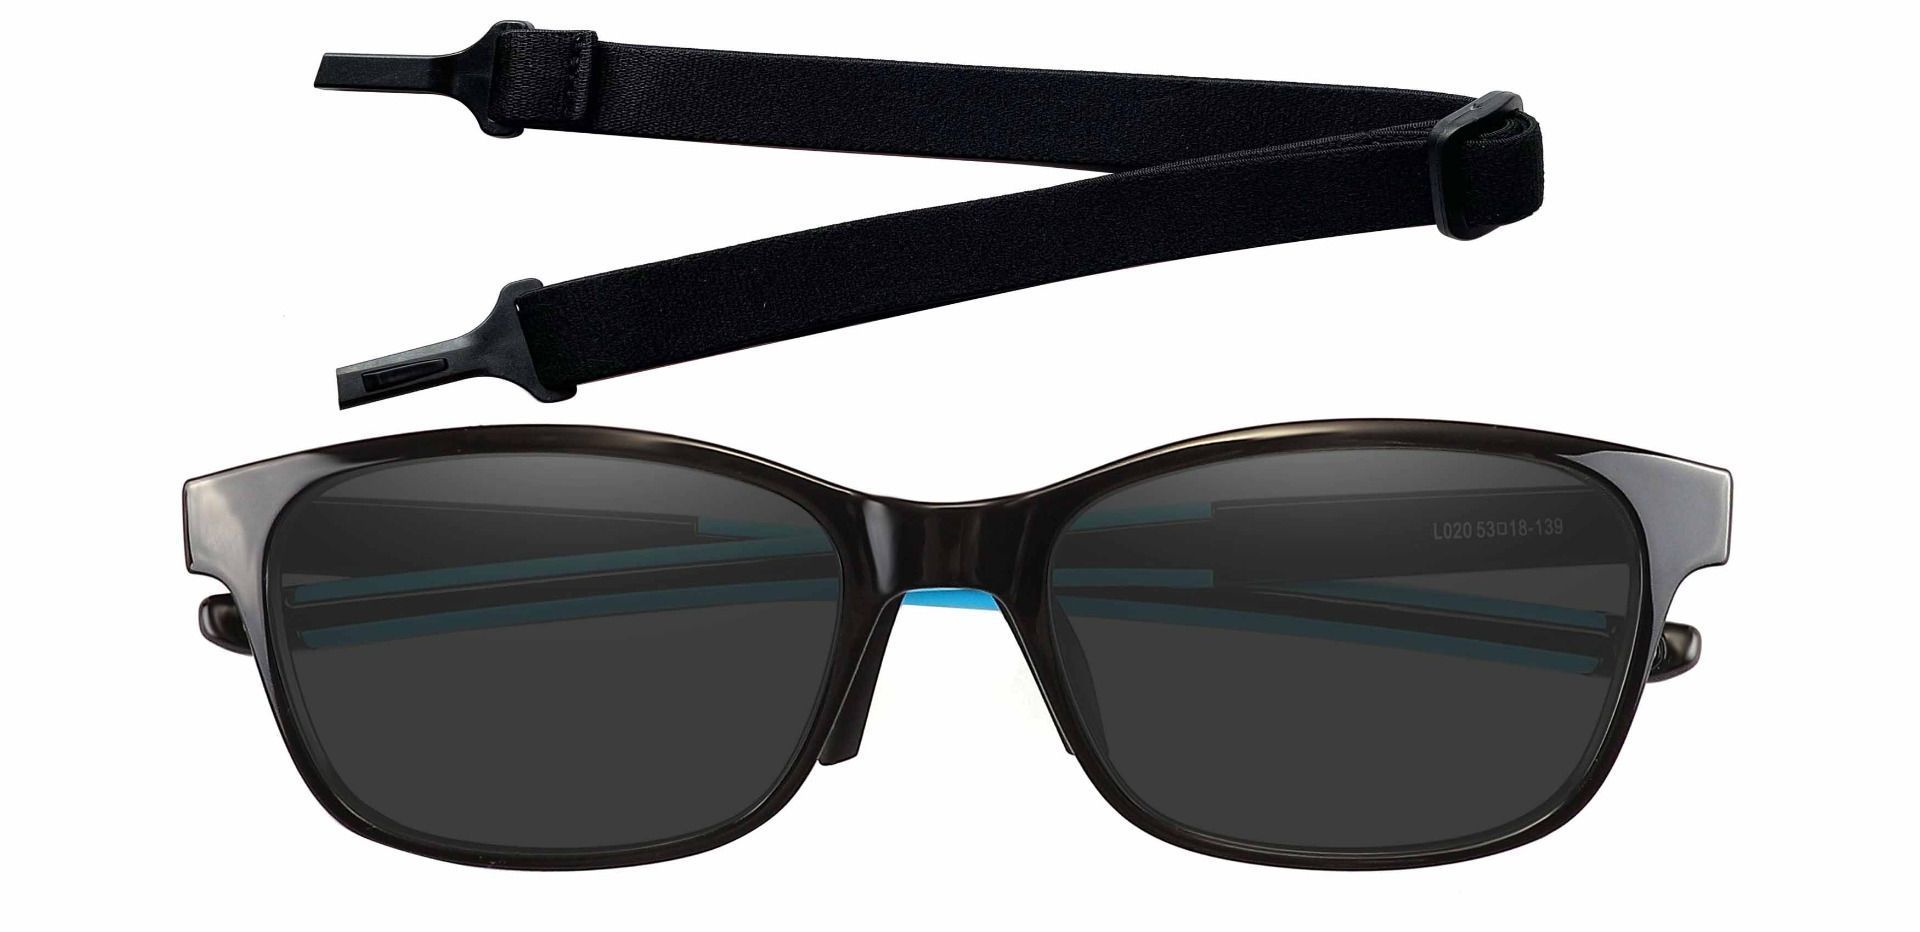 Higgins Rectangle Non-Rx Sunglasses - Black Frame With Gray Lenses